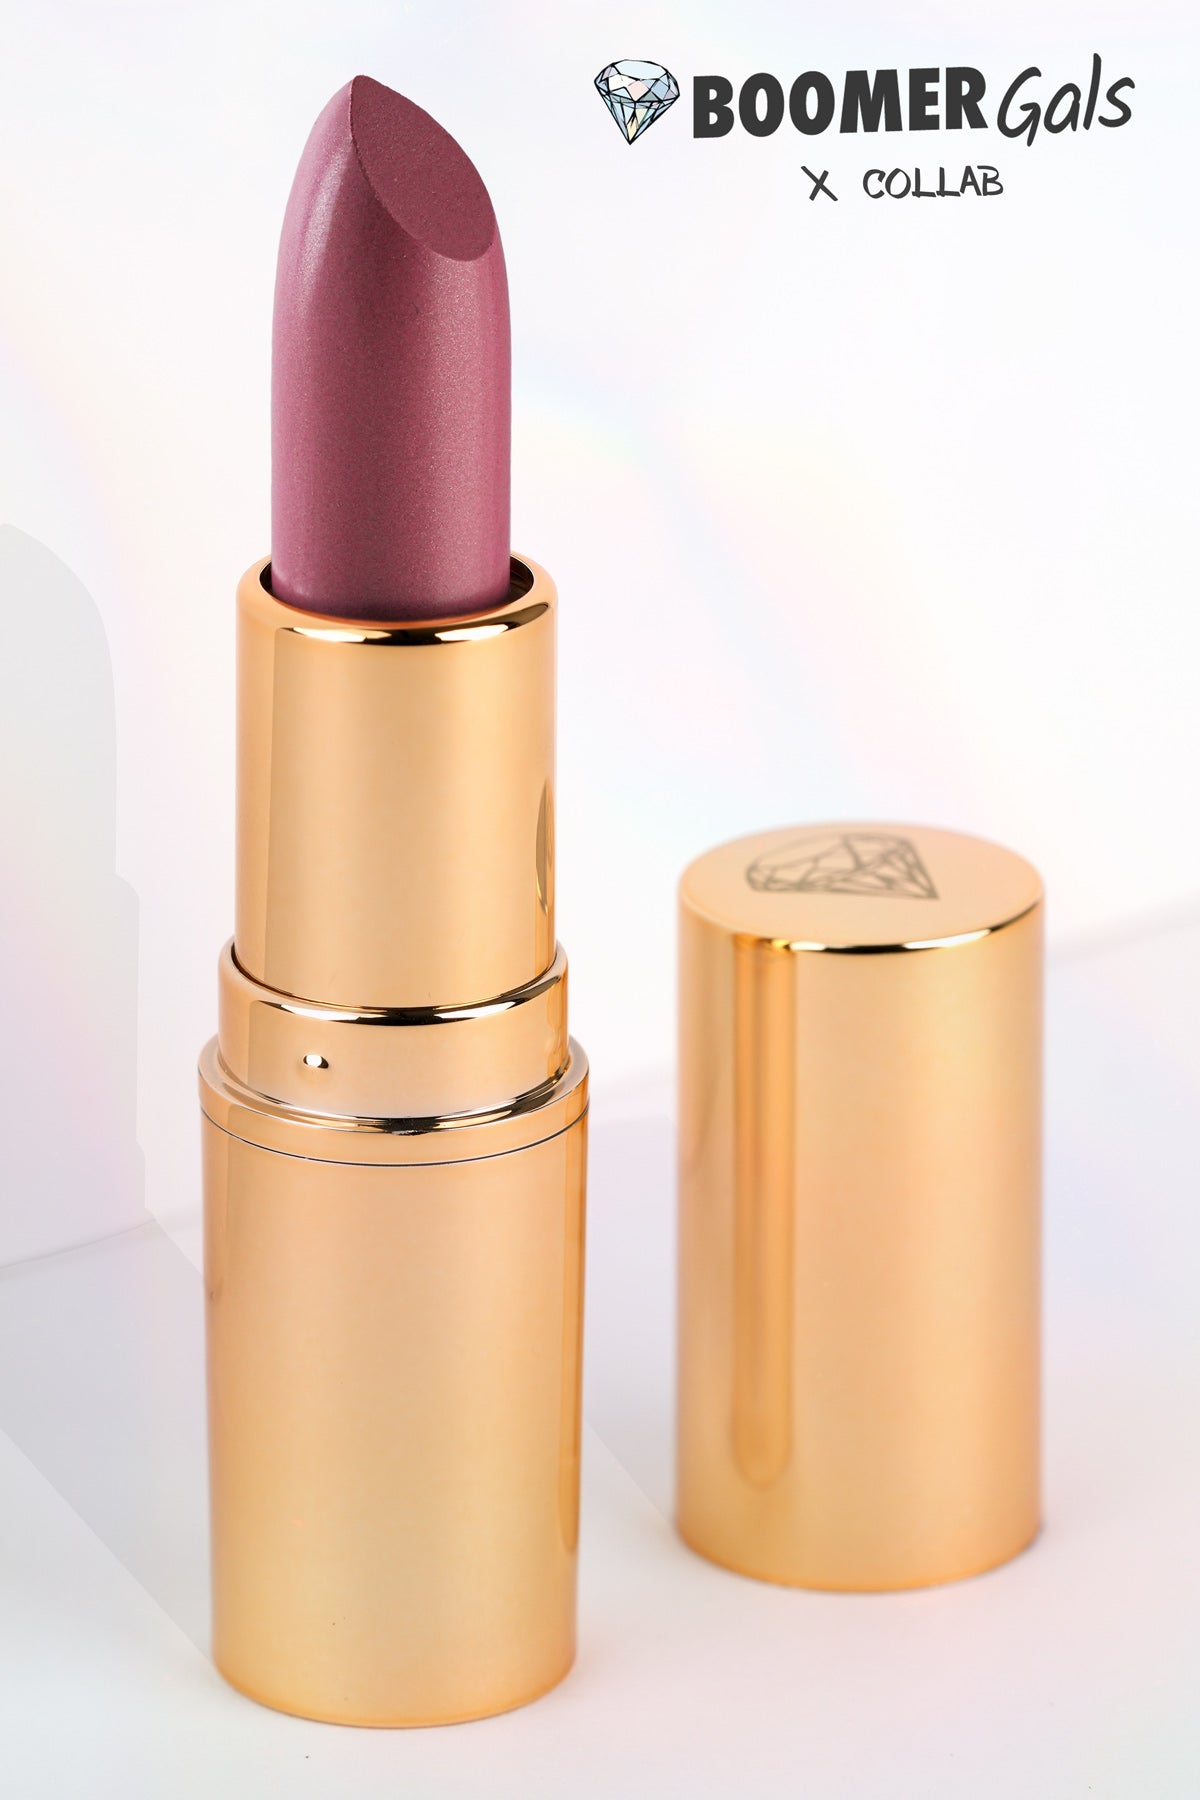 'Deborah’s deep cool purple' Boomer Gals - Ultra Lux Hydrating Lipstick